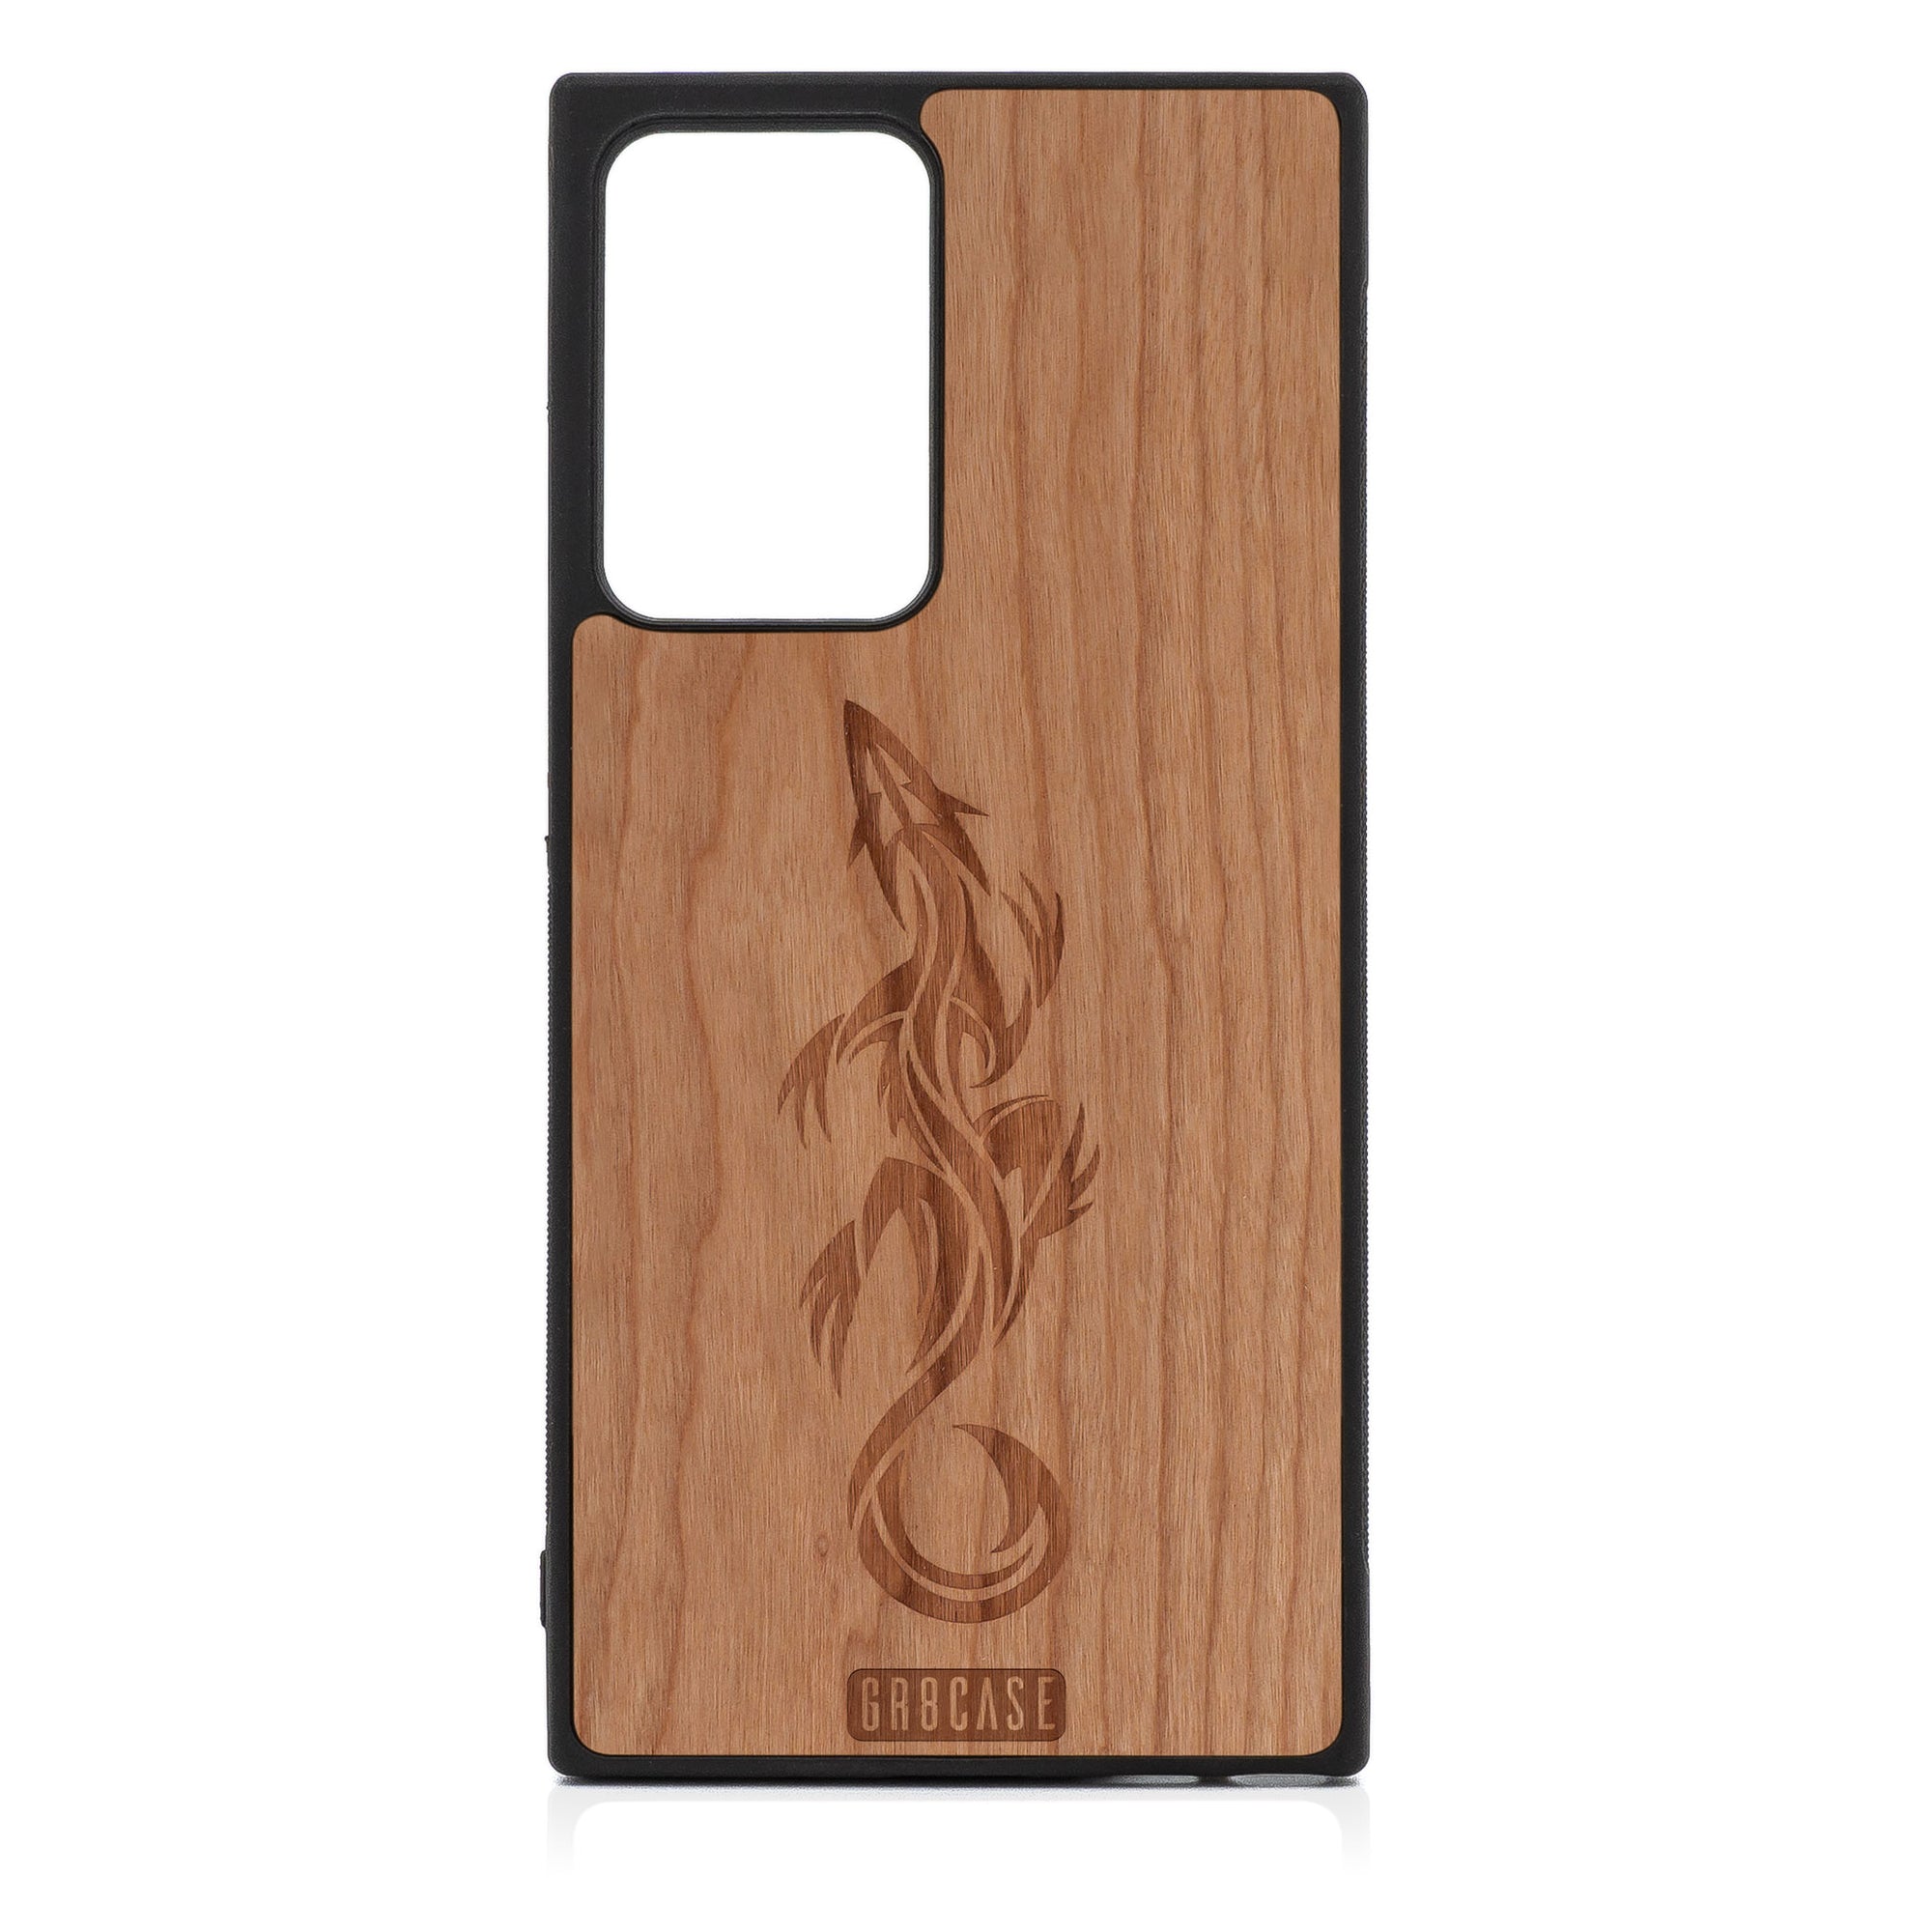 Lizard Design Wood Case For Samsung Galaxy Note 20 Ultra